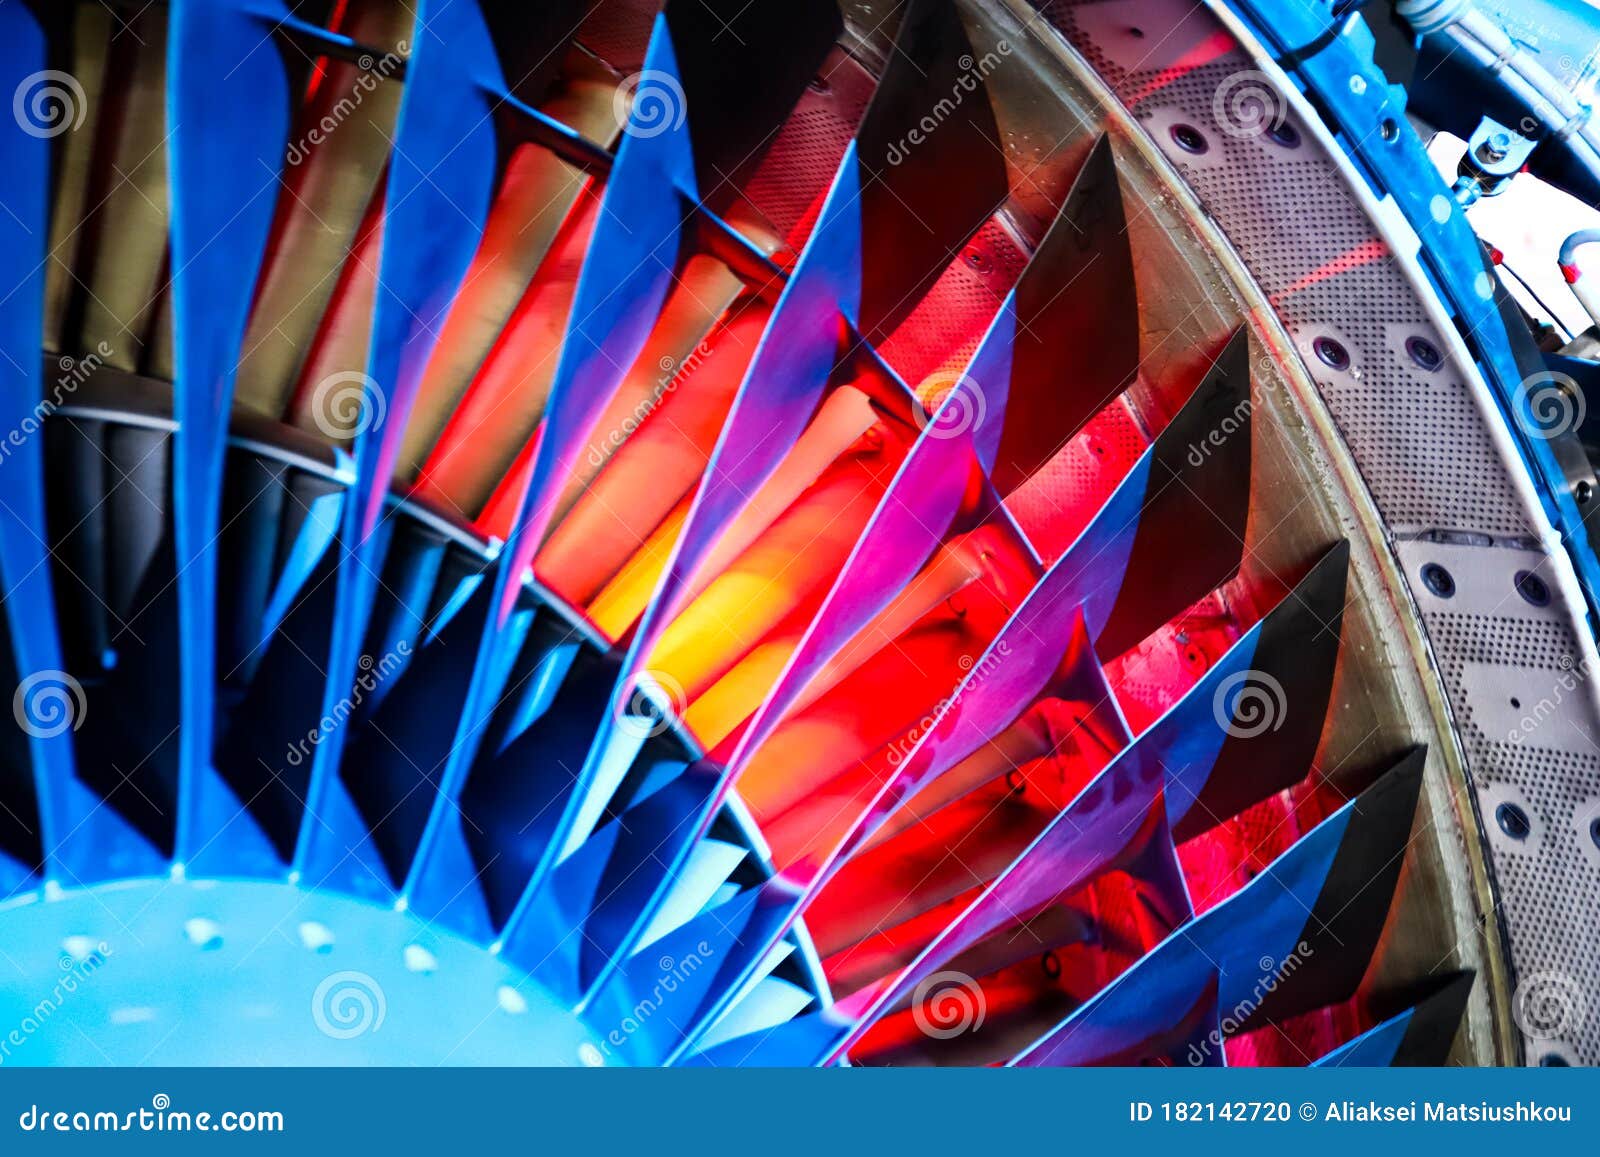 illumination turbine motor airplane